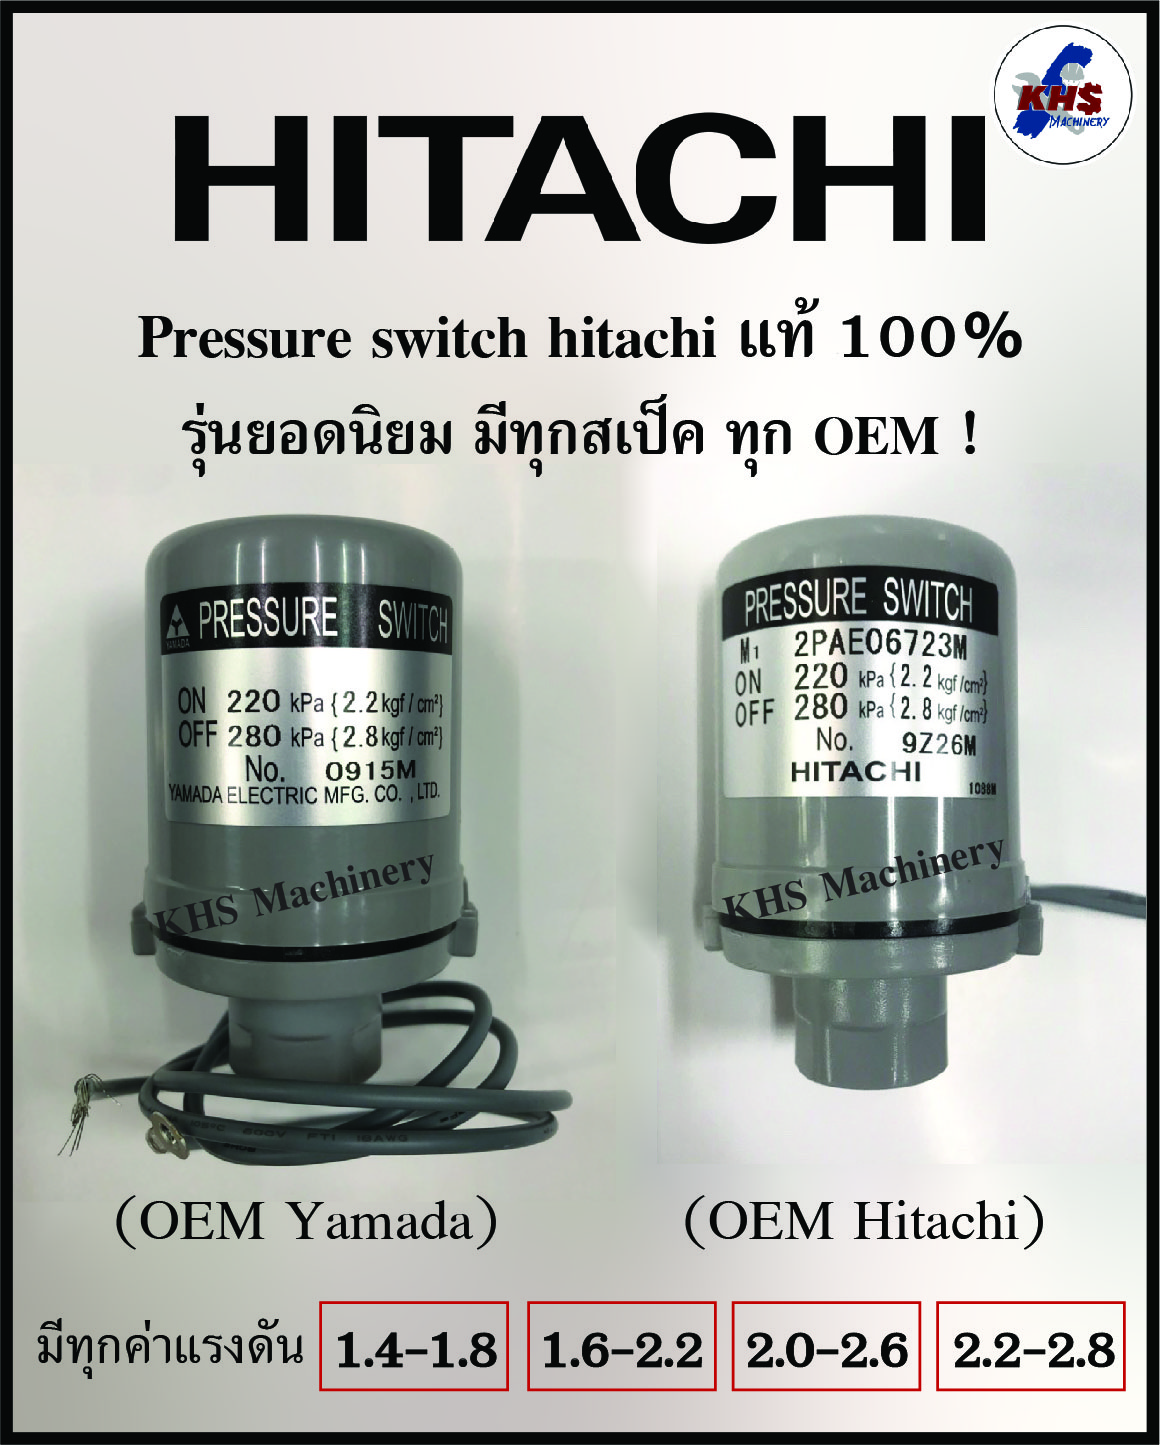 Pressure switch ของแท้100% ใช้สำหรับปั๊มน้ำ Hitachi แบบ Auto มีทุกรุ่น